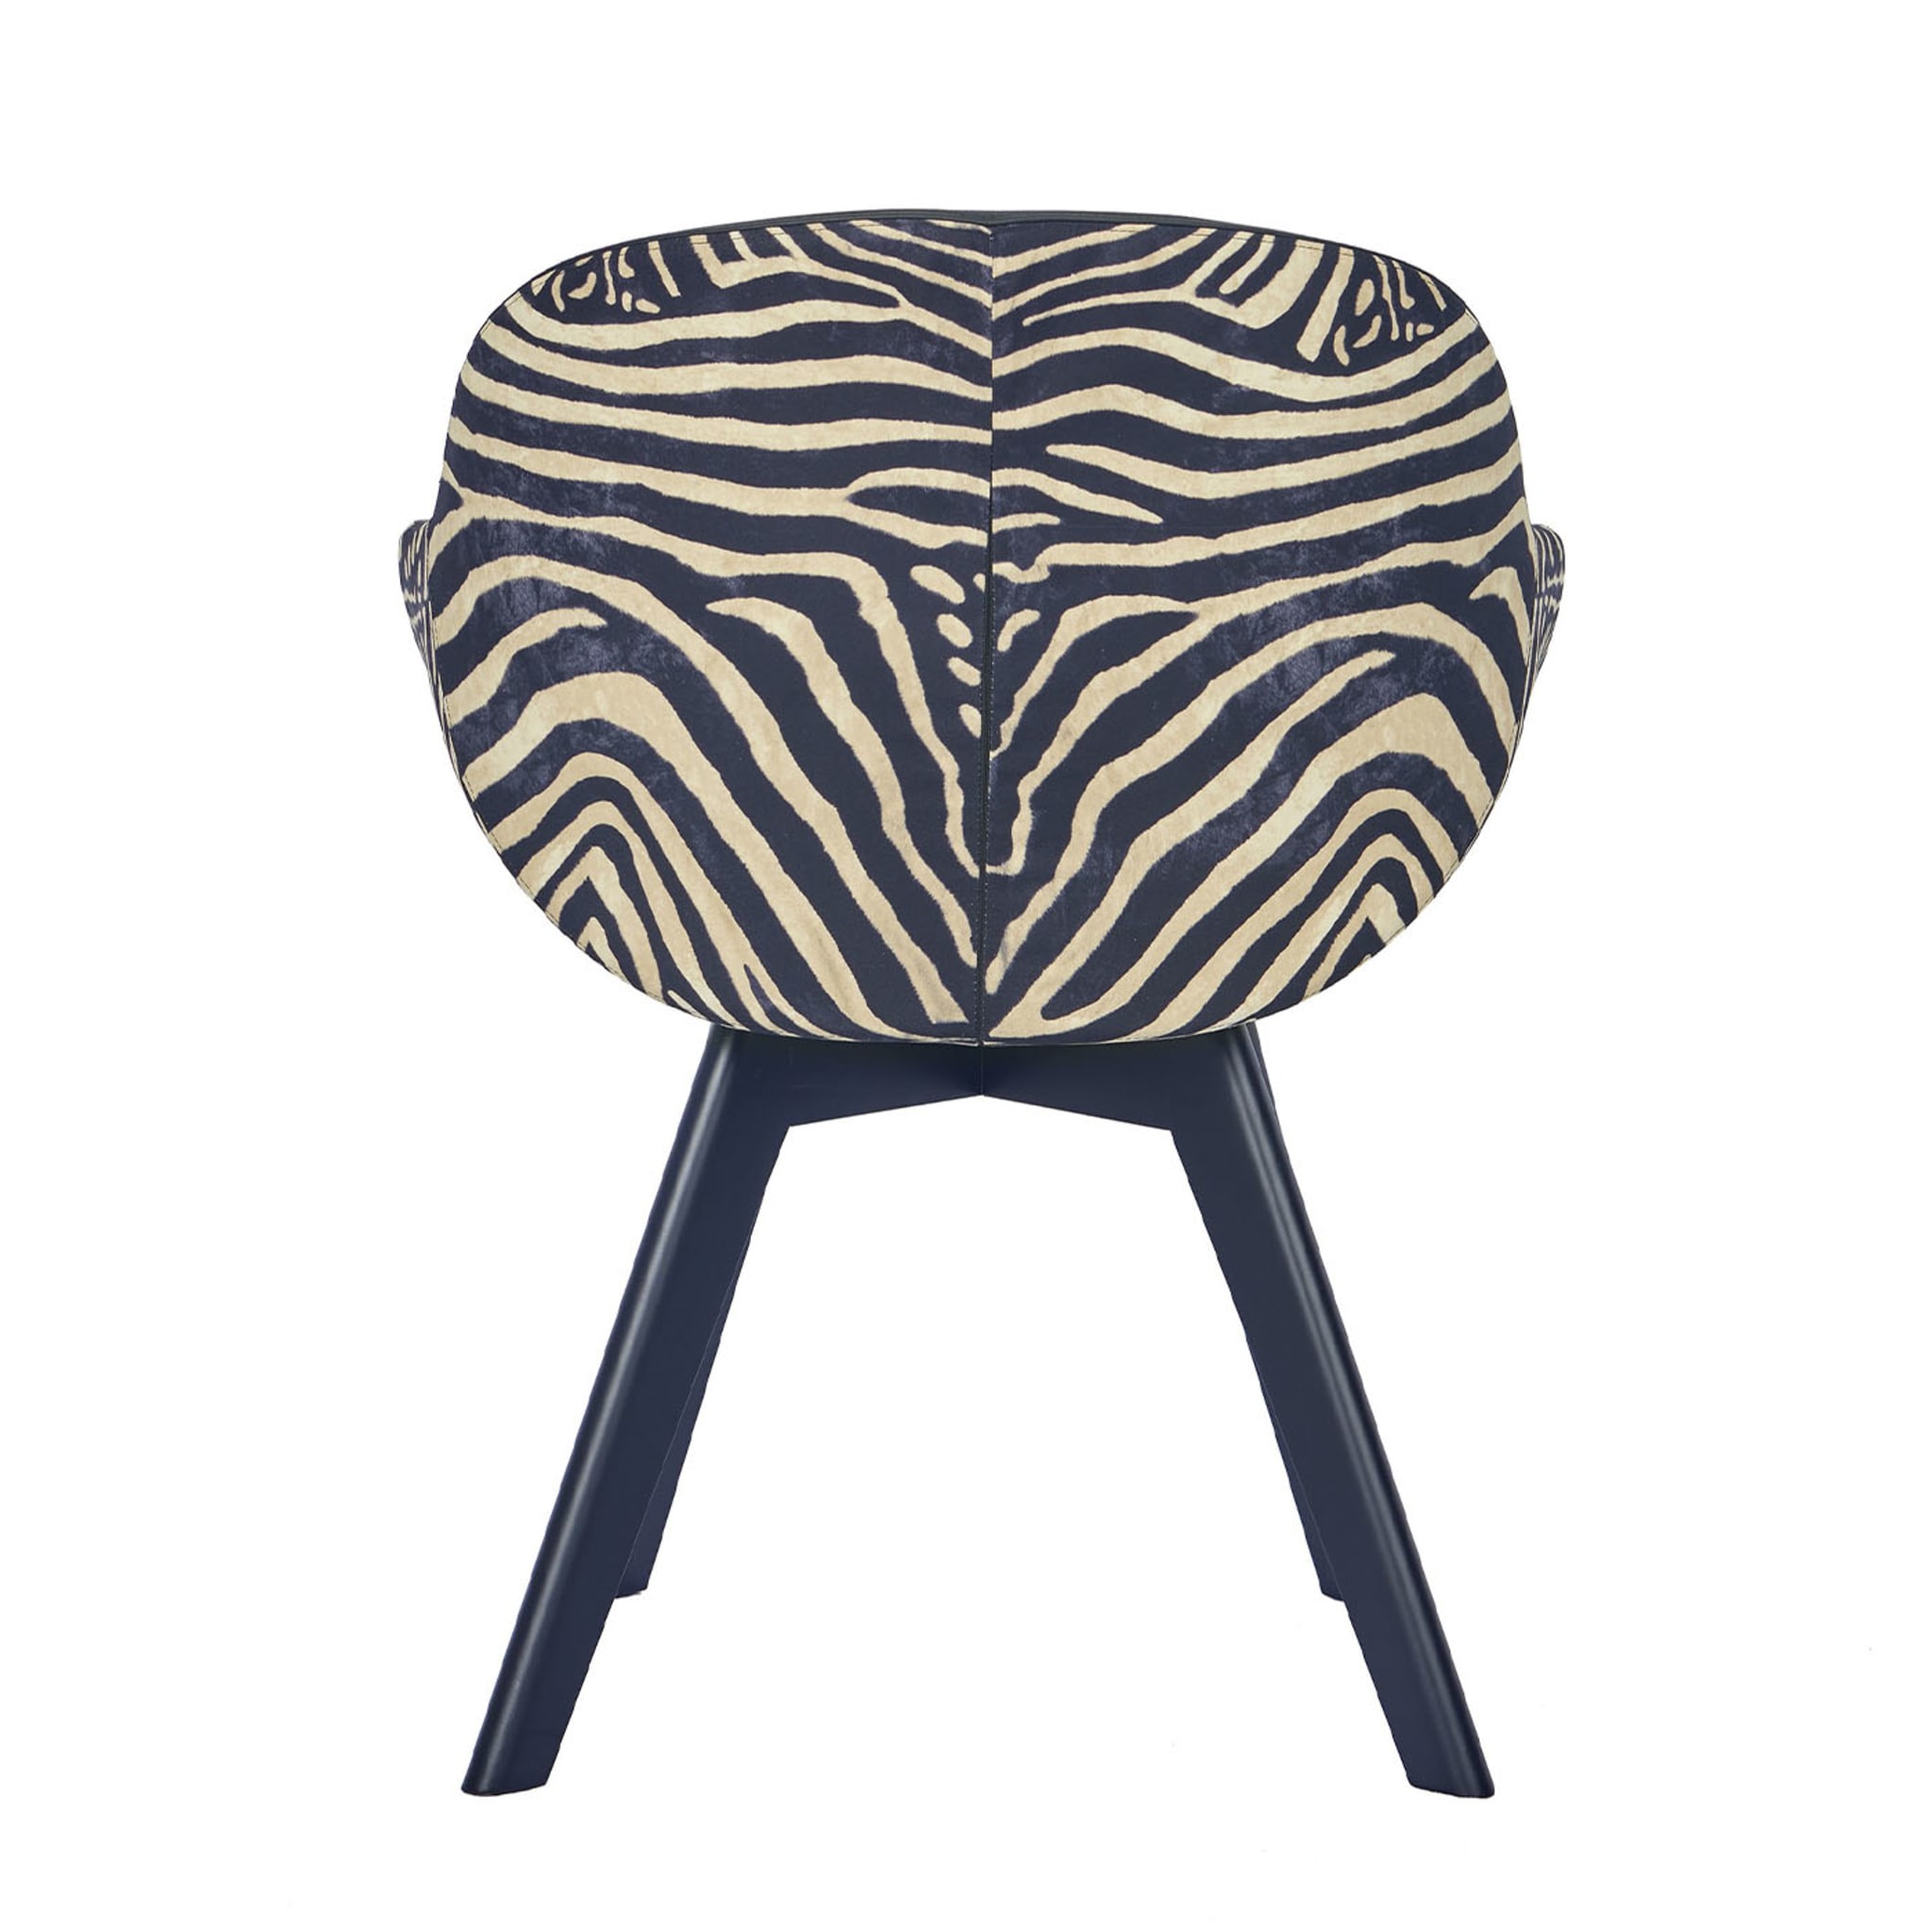 Kiros Lup Zebra-Striped Lounge Chair - Alternative view 1